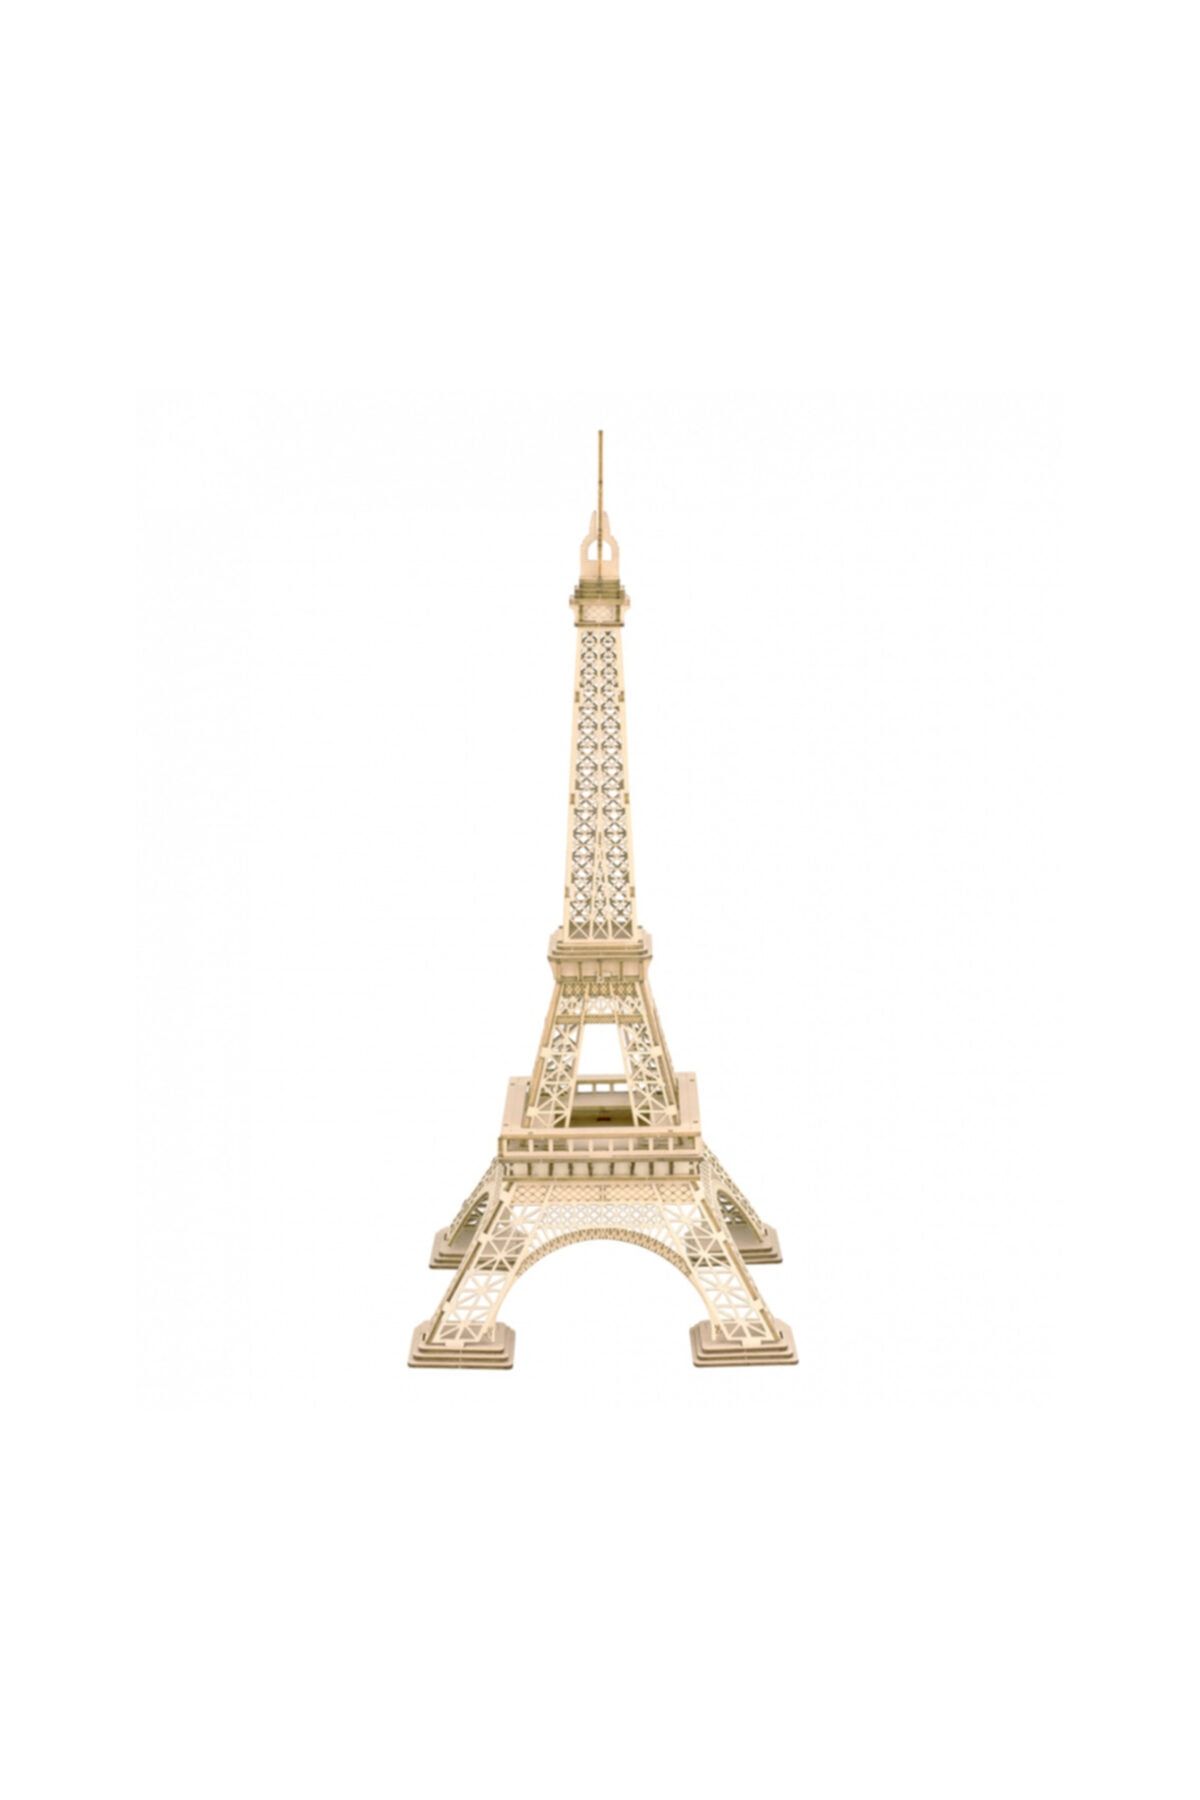 Hobi Modelci Eiffel Tower Model Kit - Maket Eiffel Kulesi - 3d Puzzle - Ahşap Eyfel Kulesi